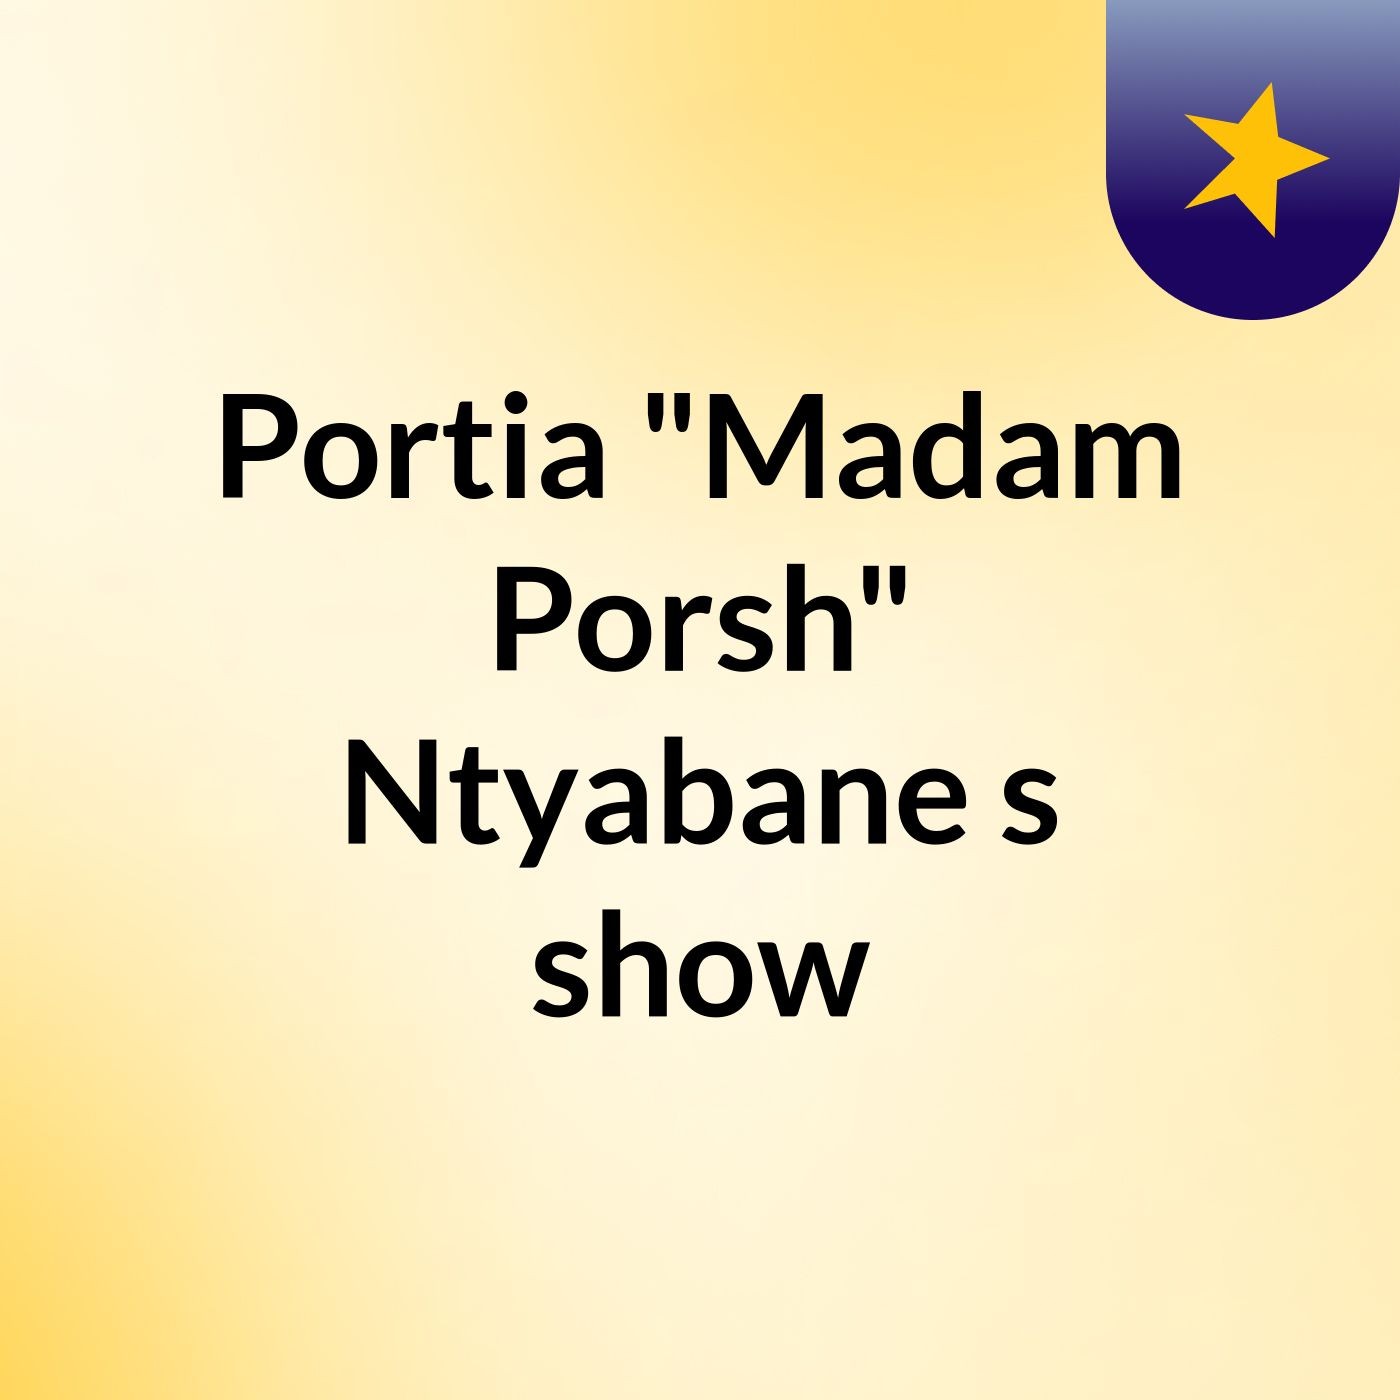 Portia "Madam Porsh" Ntyabane's show